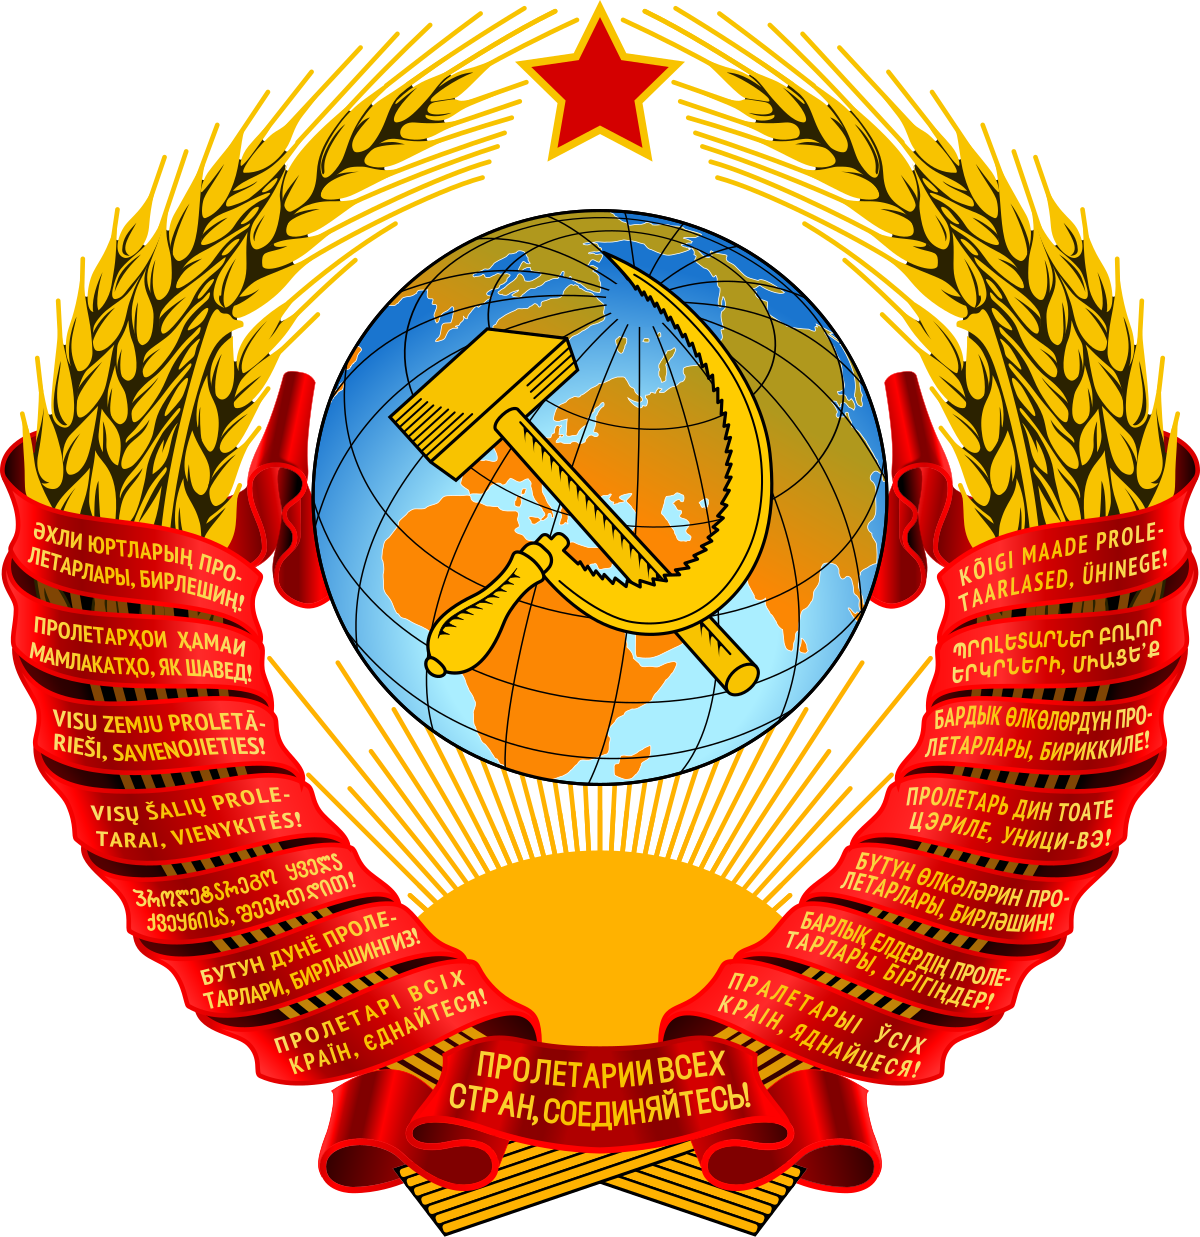 daftar pemimpin uni soviet